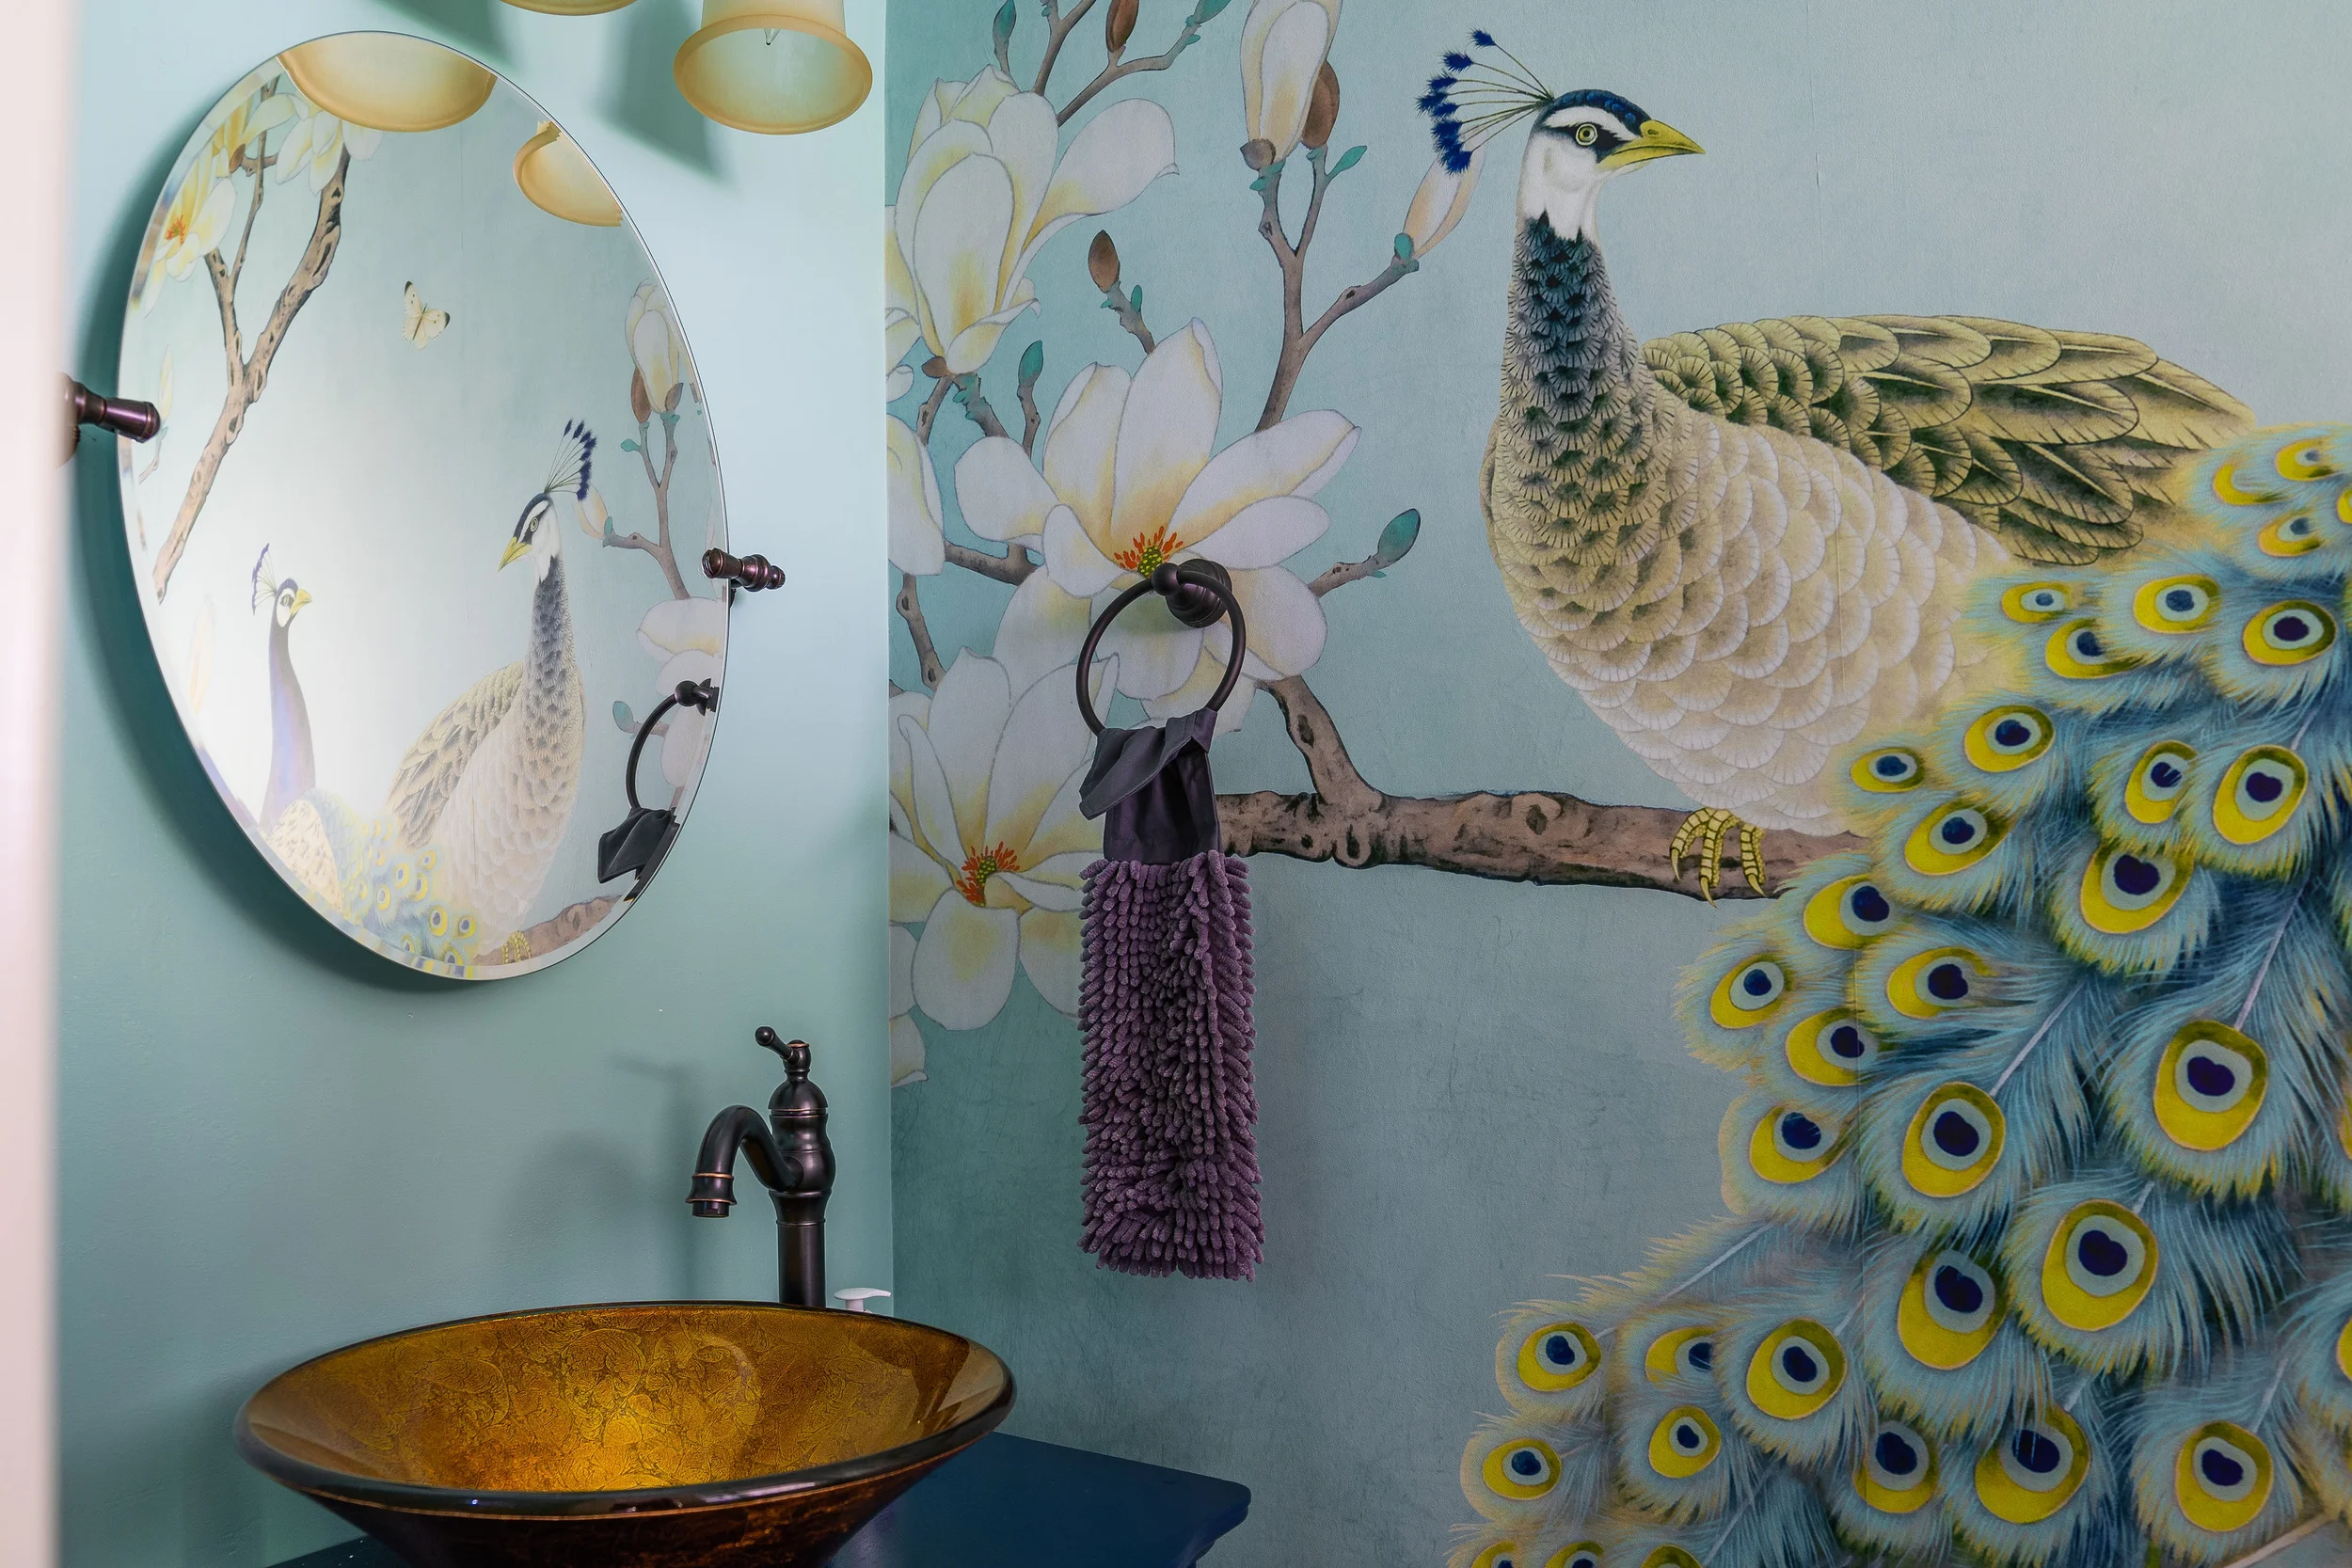 Peacock Wallpaper in small bathroom